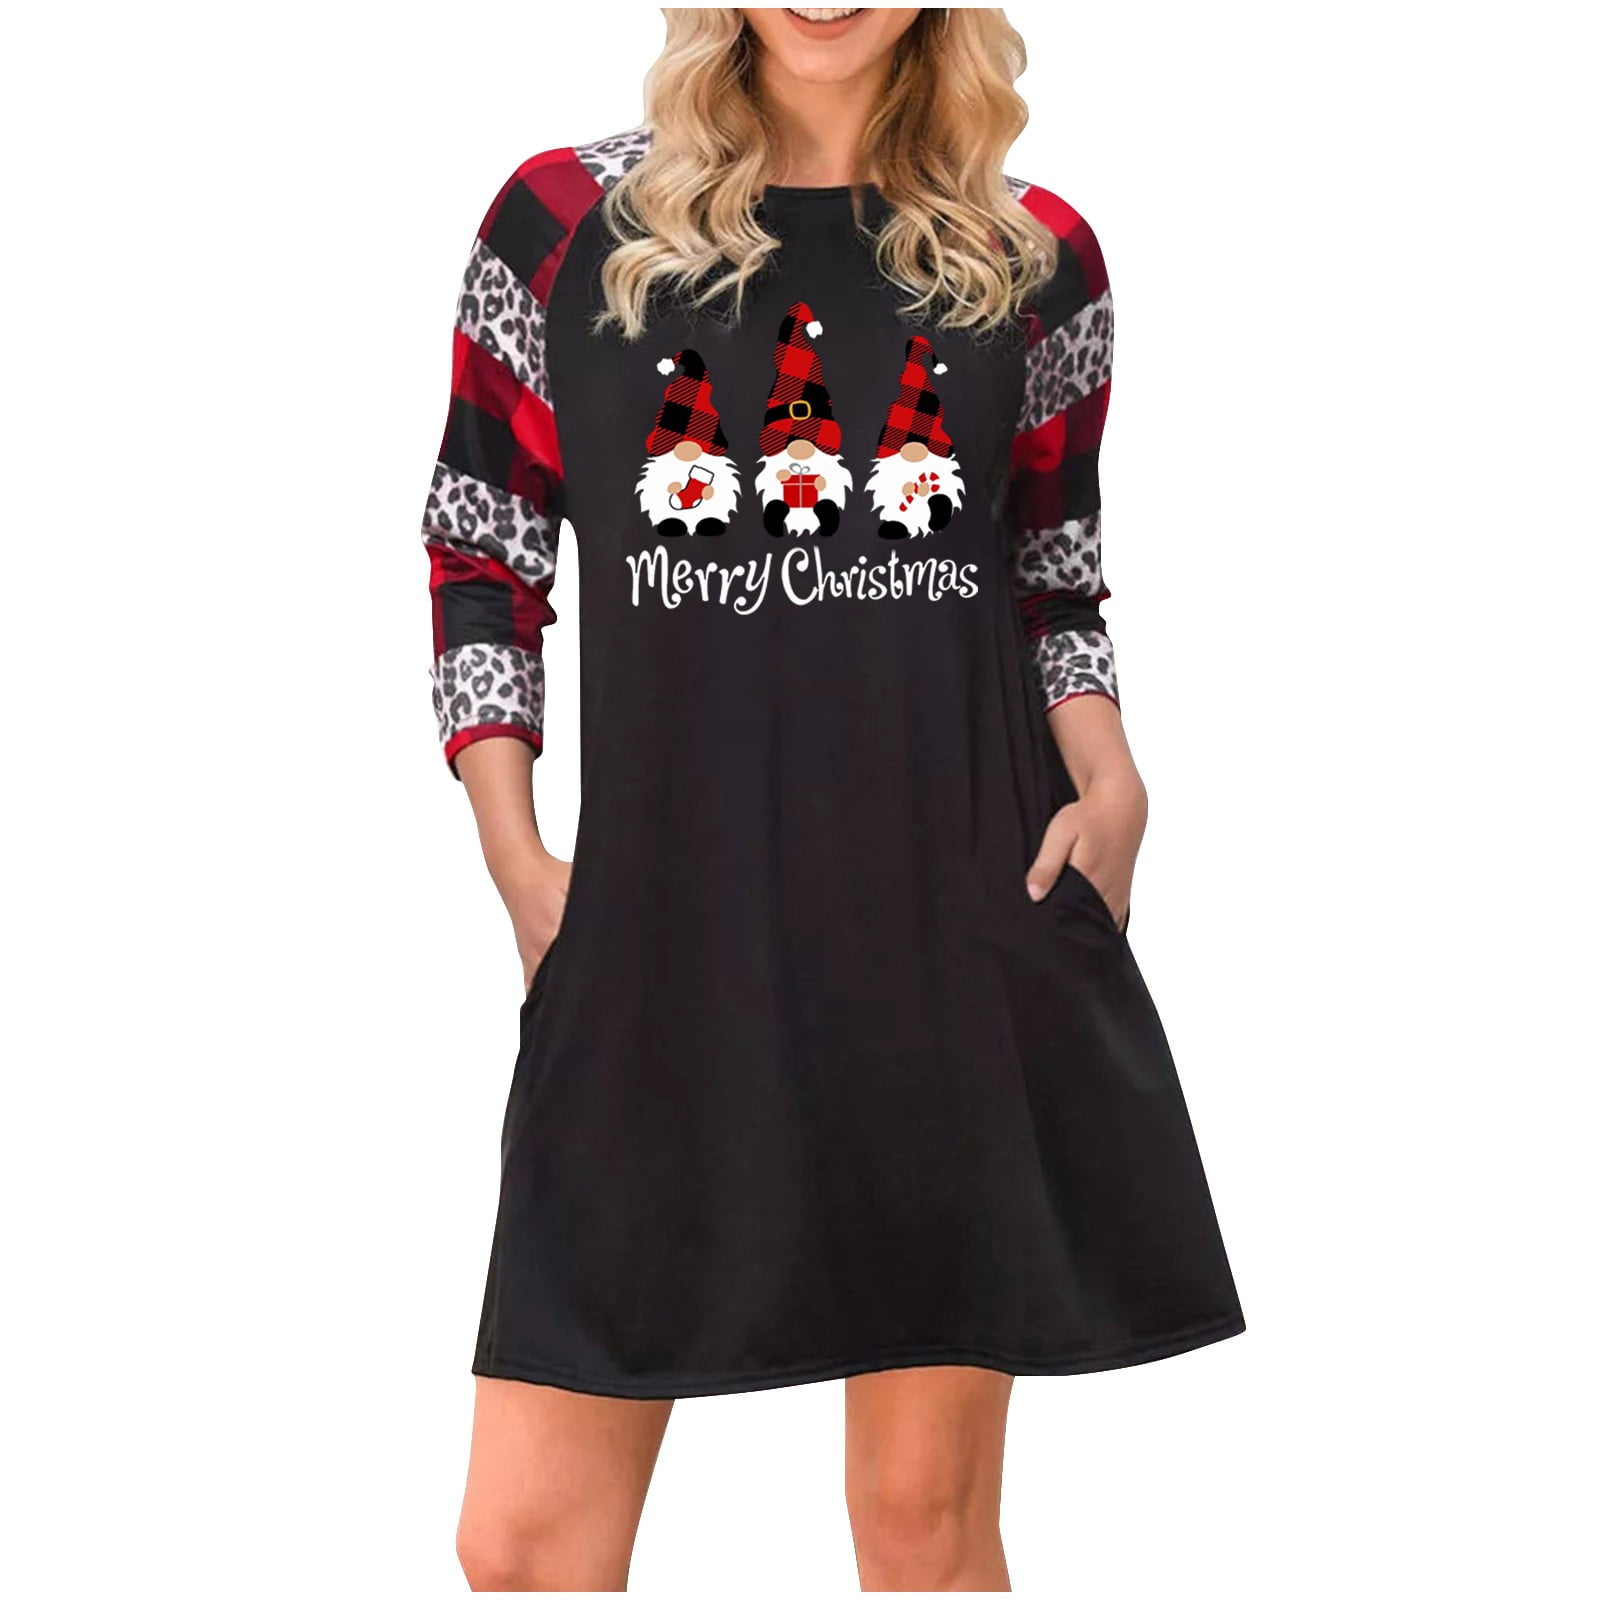 Guvpev Women Christmas Print Long Sleeve Tunic Pockets Size T-shirt Dress christmas for Women - Black XXXXL Walmart.com